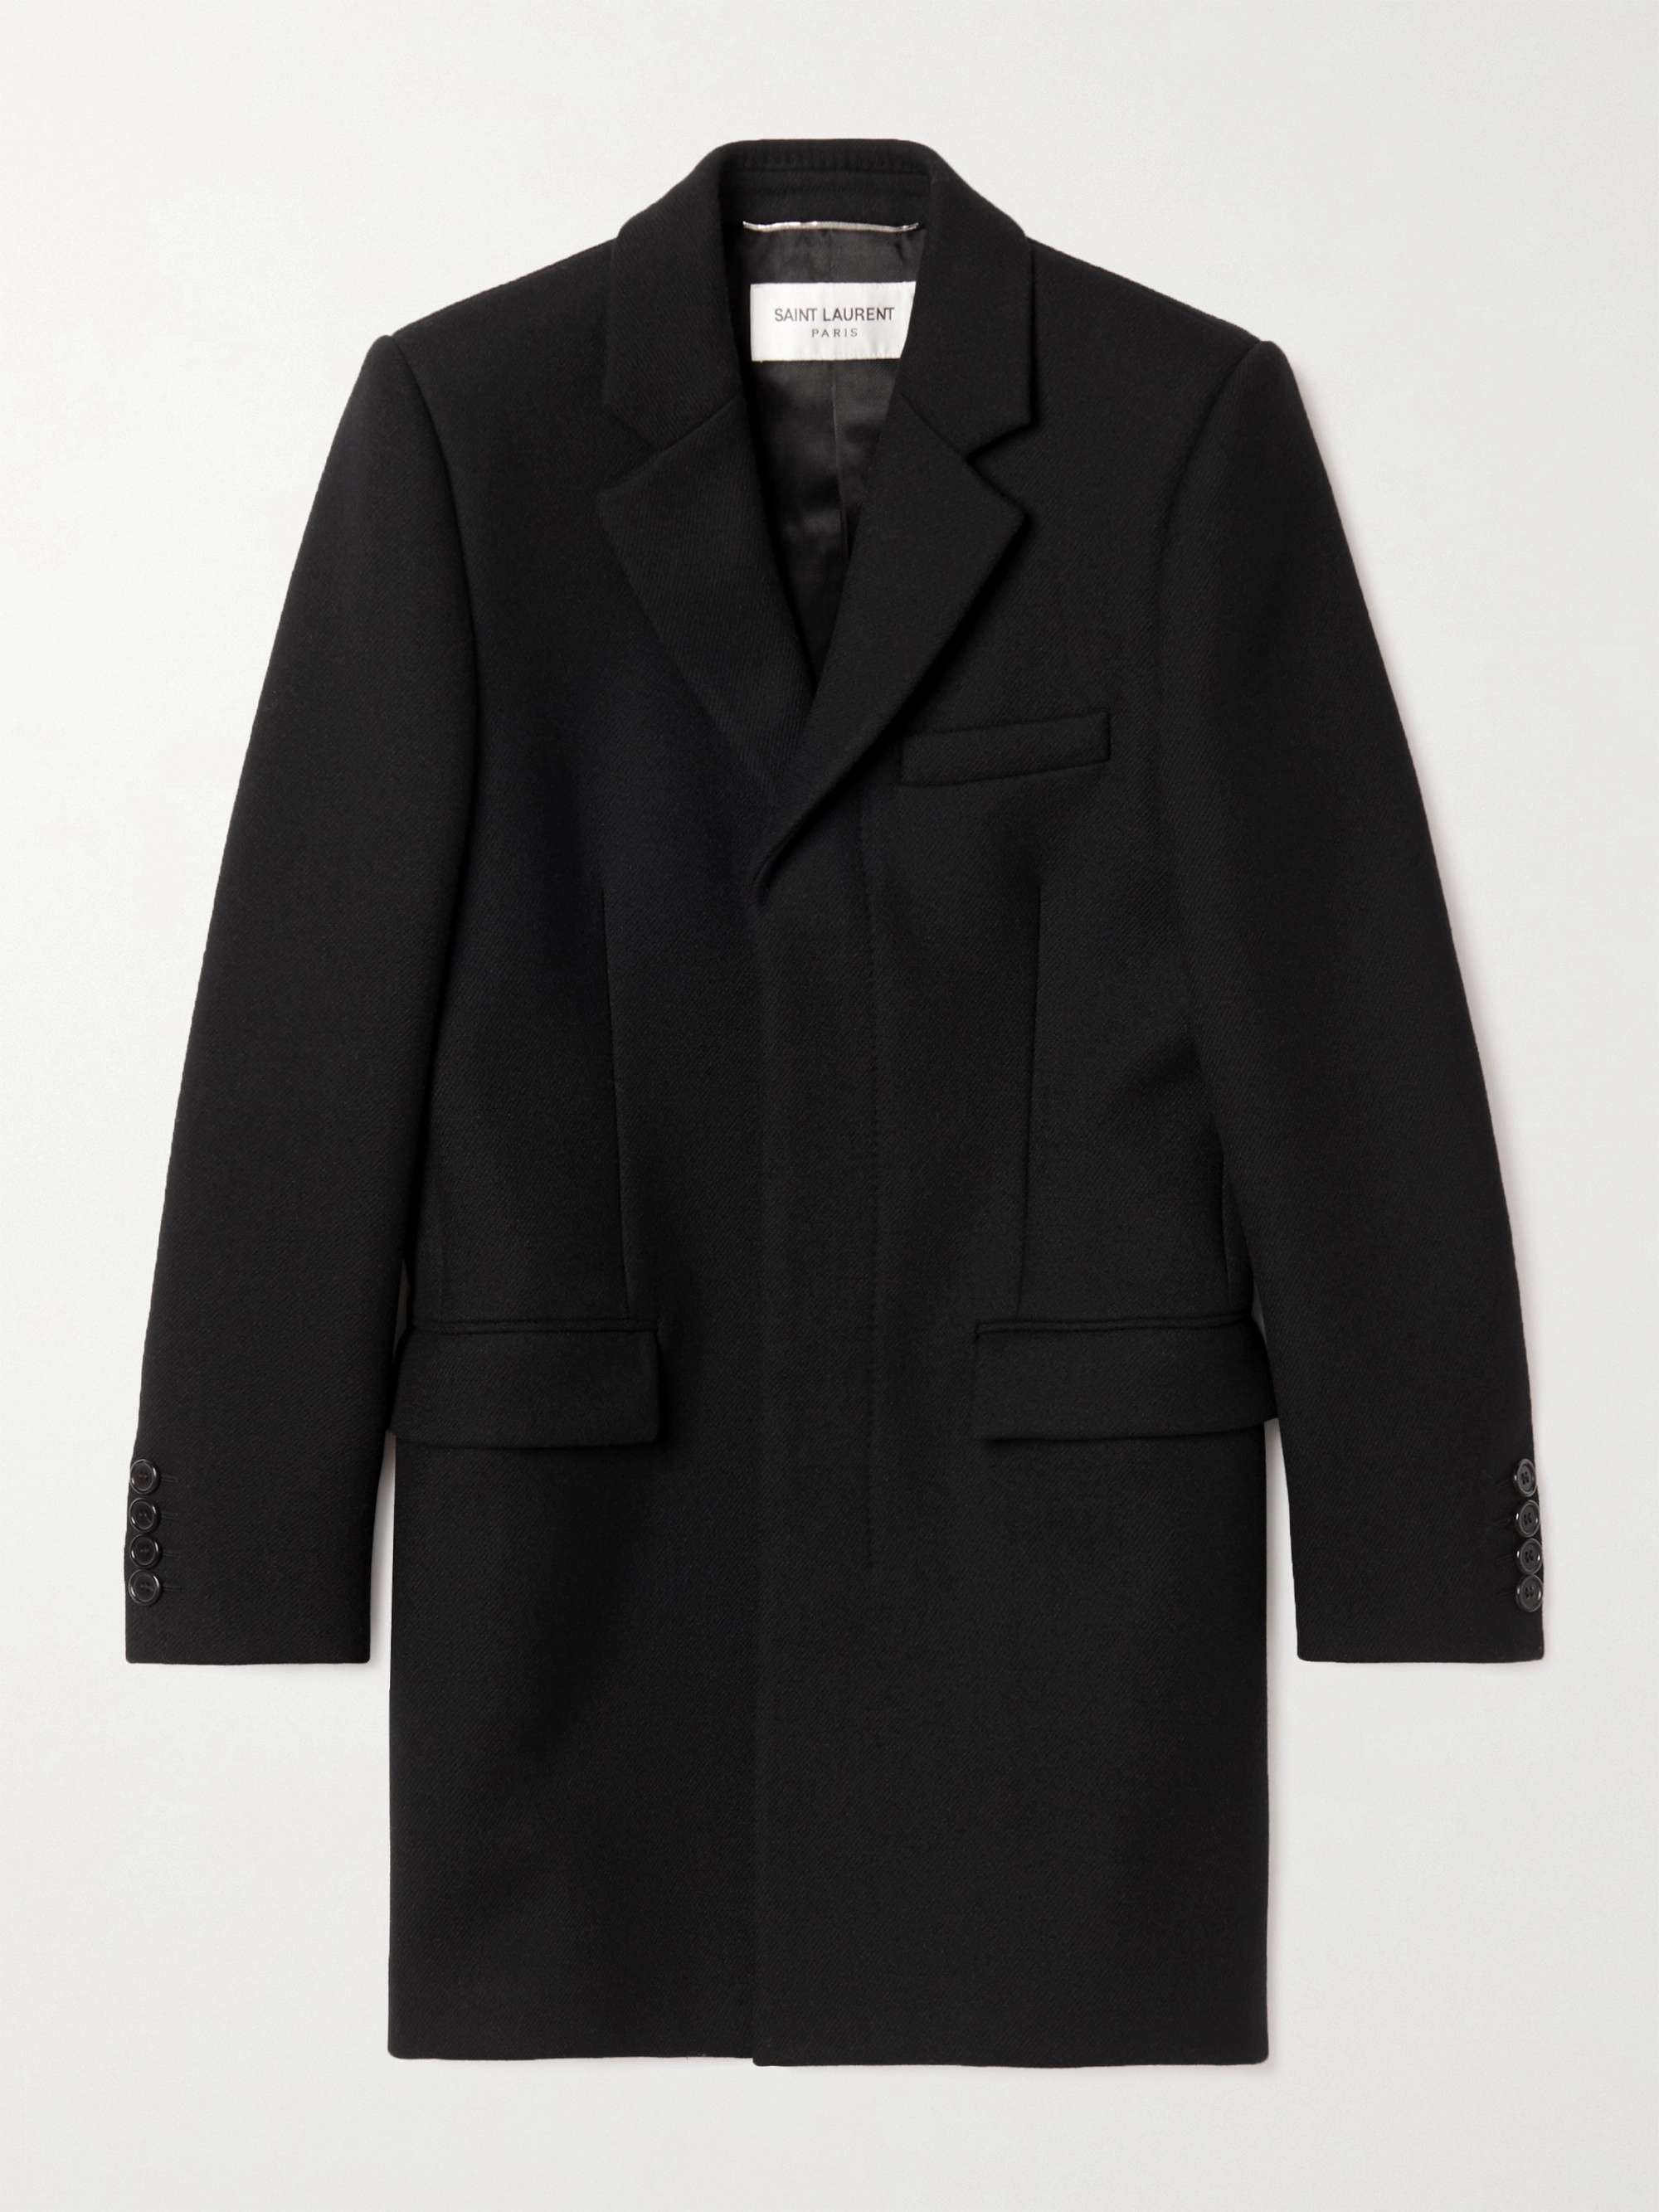 SAINT LAURENT Slim-Fit Wool Coat for Men | MR PORTER